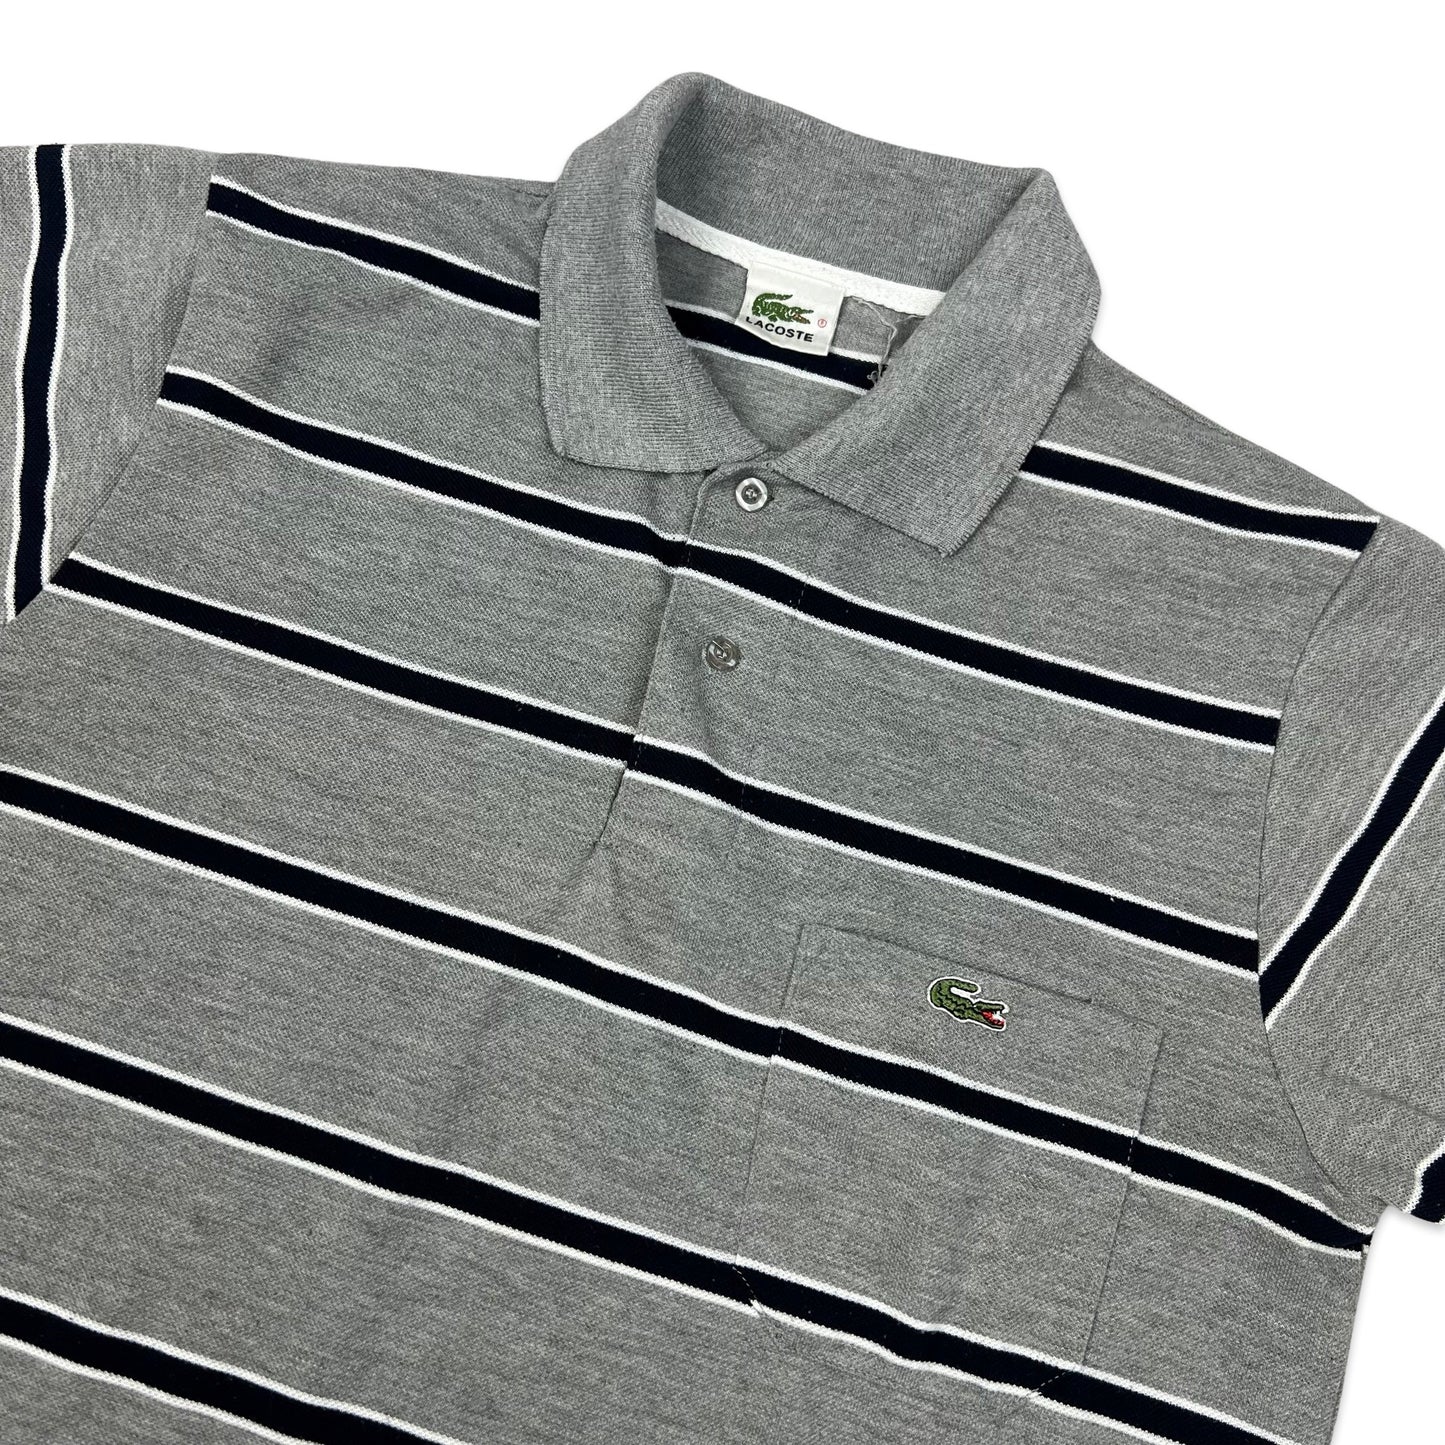 Lacoste Grey & Black Striped Polo Shirt S M